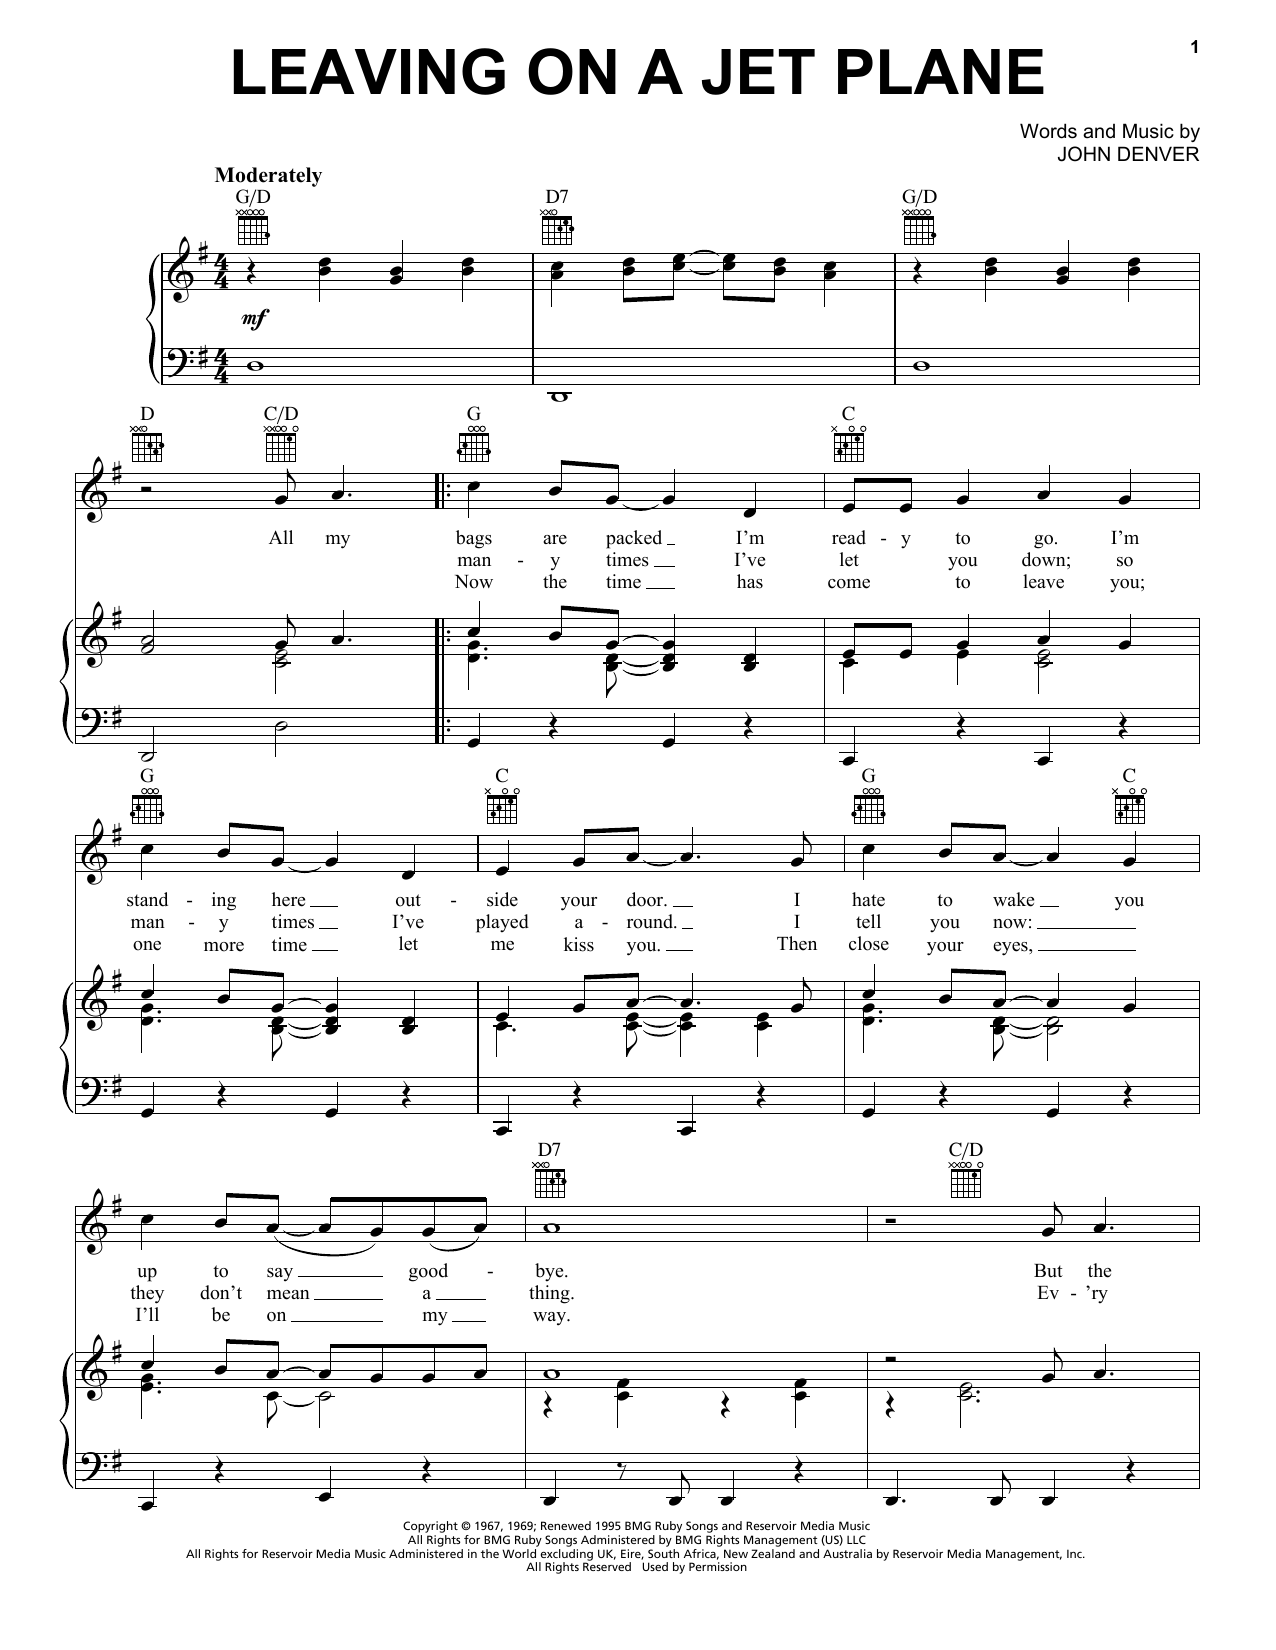 John Denver Leaving On A Jet Plane Sheet Music Notes & Chords for Melody Line, Lyrics & Chords - Download or Print PDF